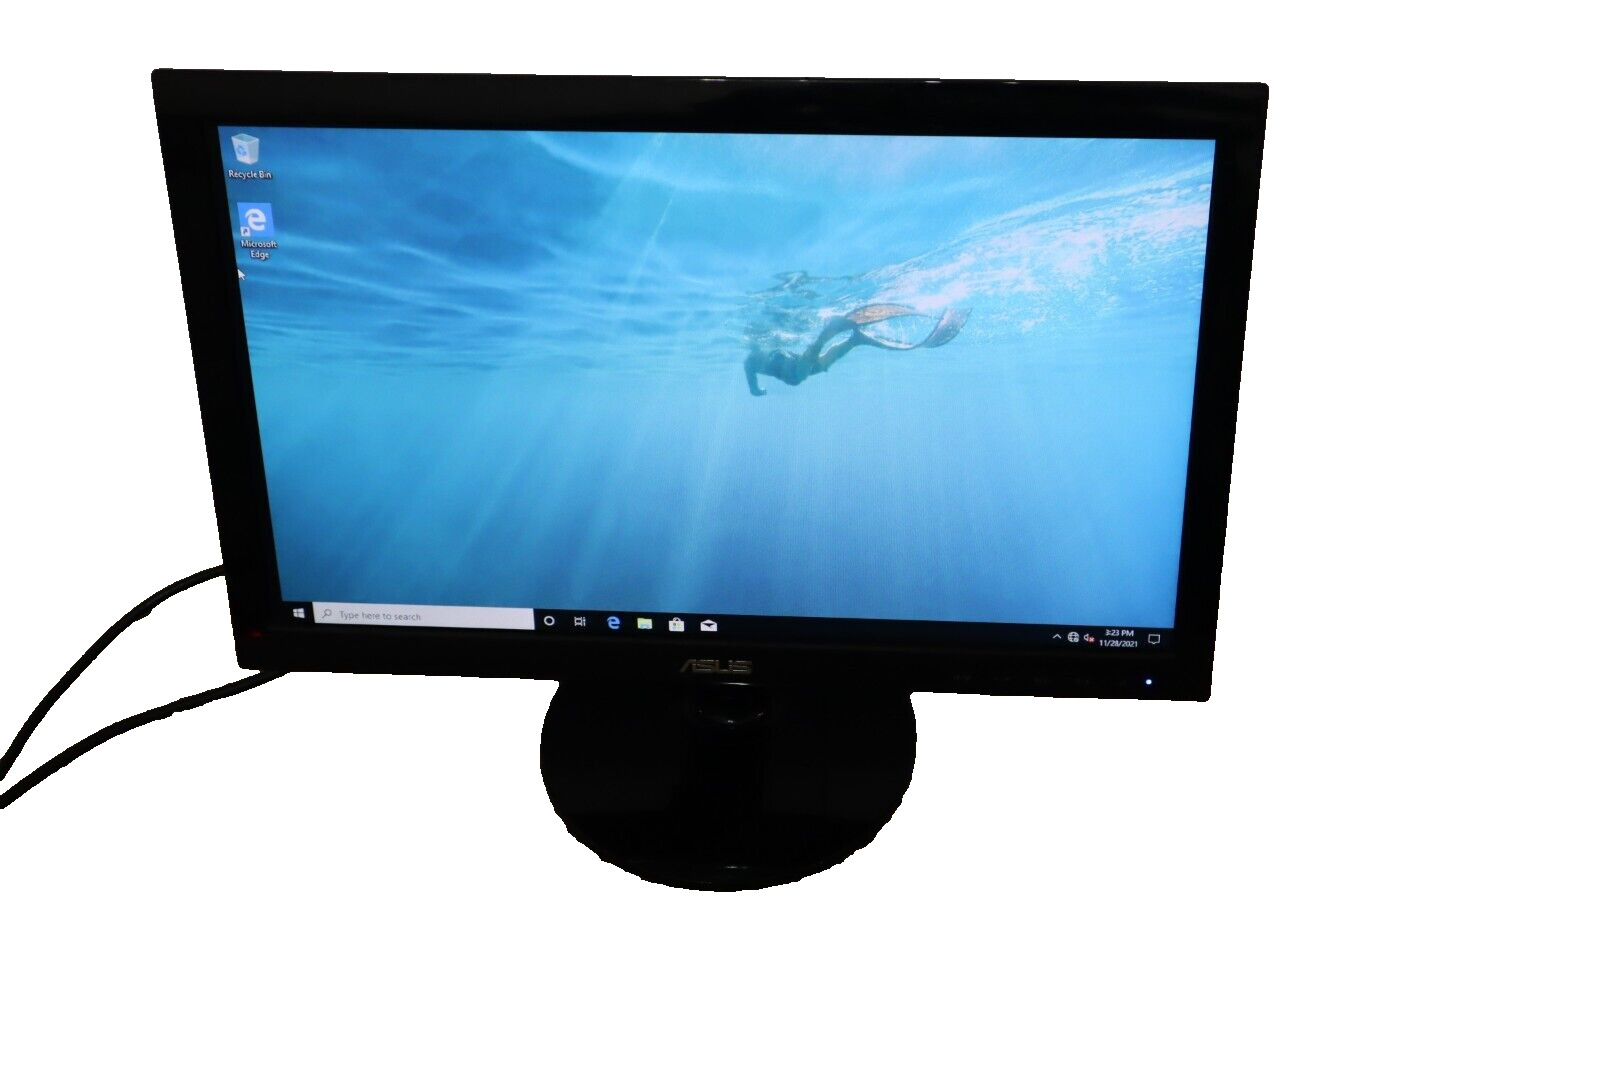 Asus VS197T-P 18.5in Widescreen LCD Monitor 1366x768 - Black